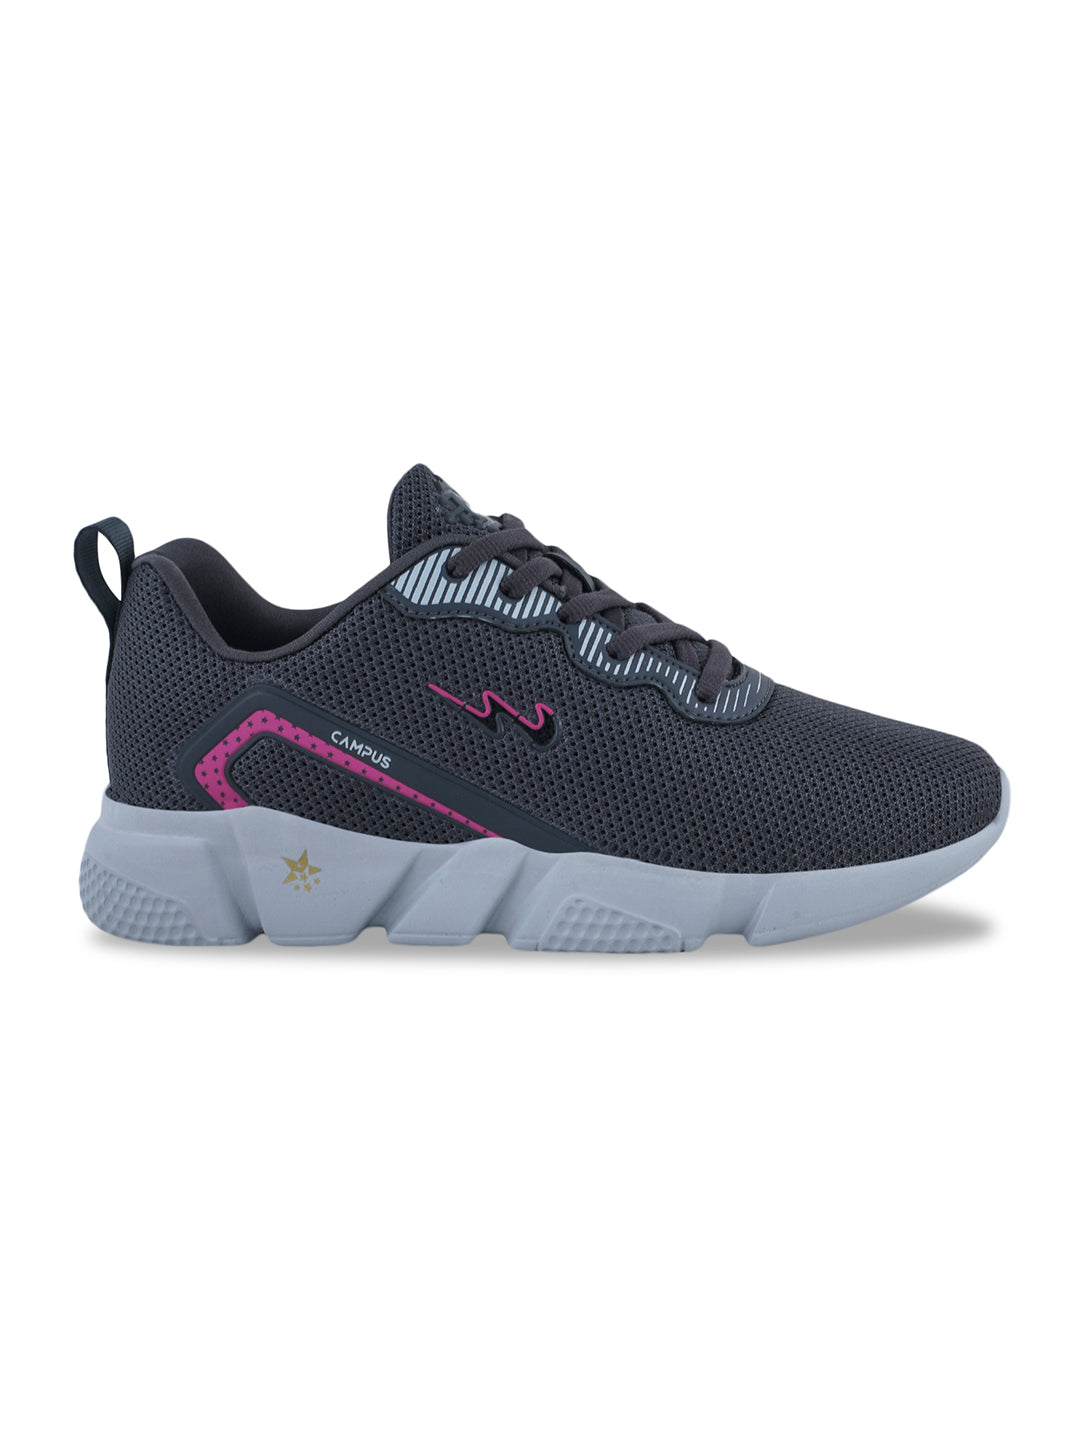 Nike Huarache Hot Pink and Gray Running Shoes Women's Size 9 | Womens  running shoes, Women shoes, Huaraches